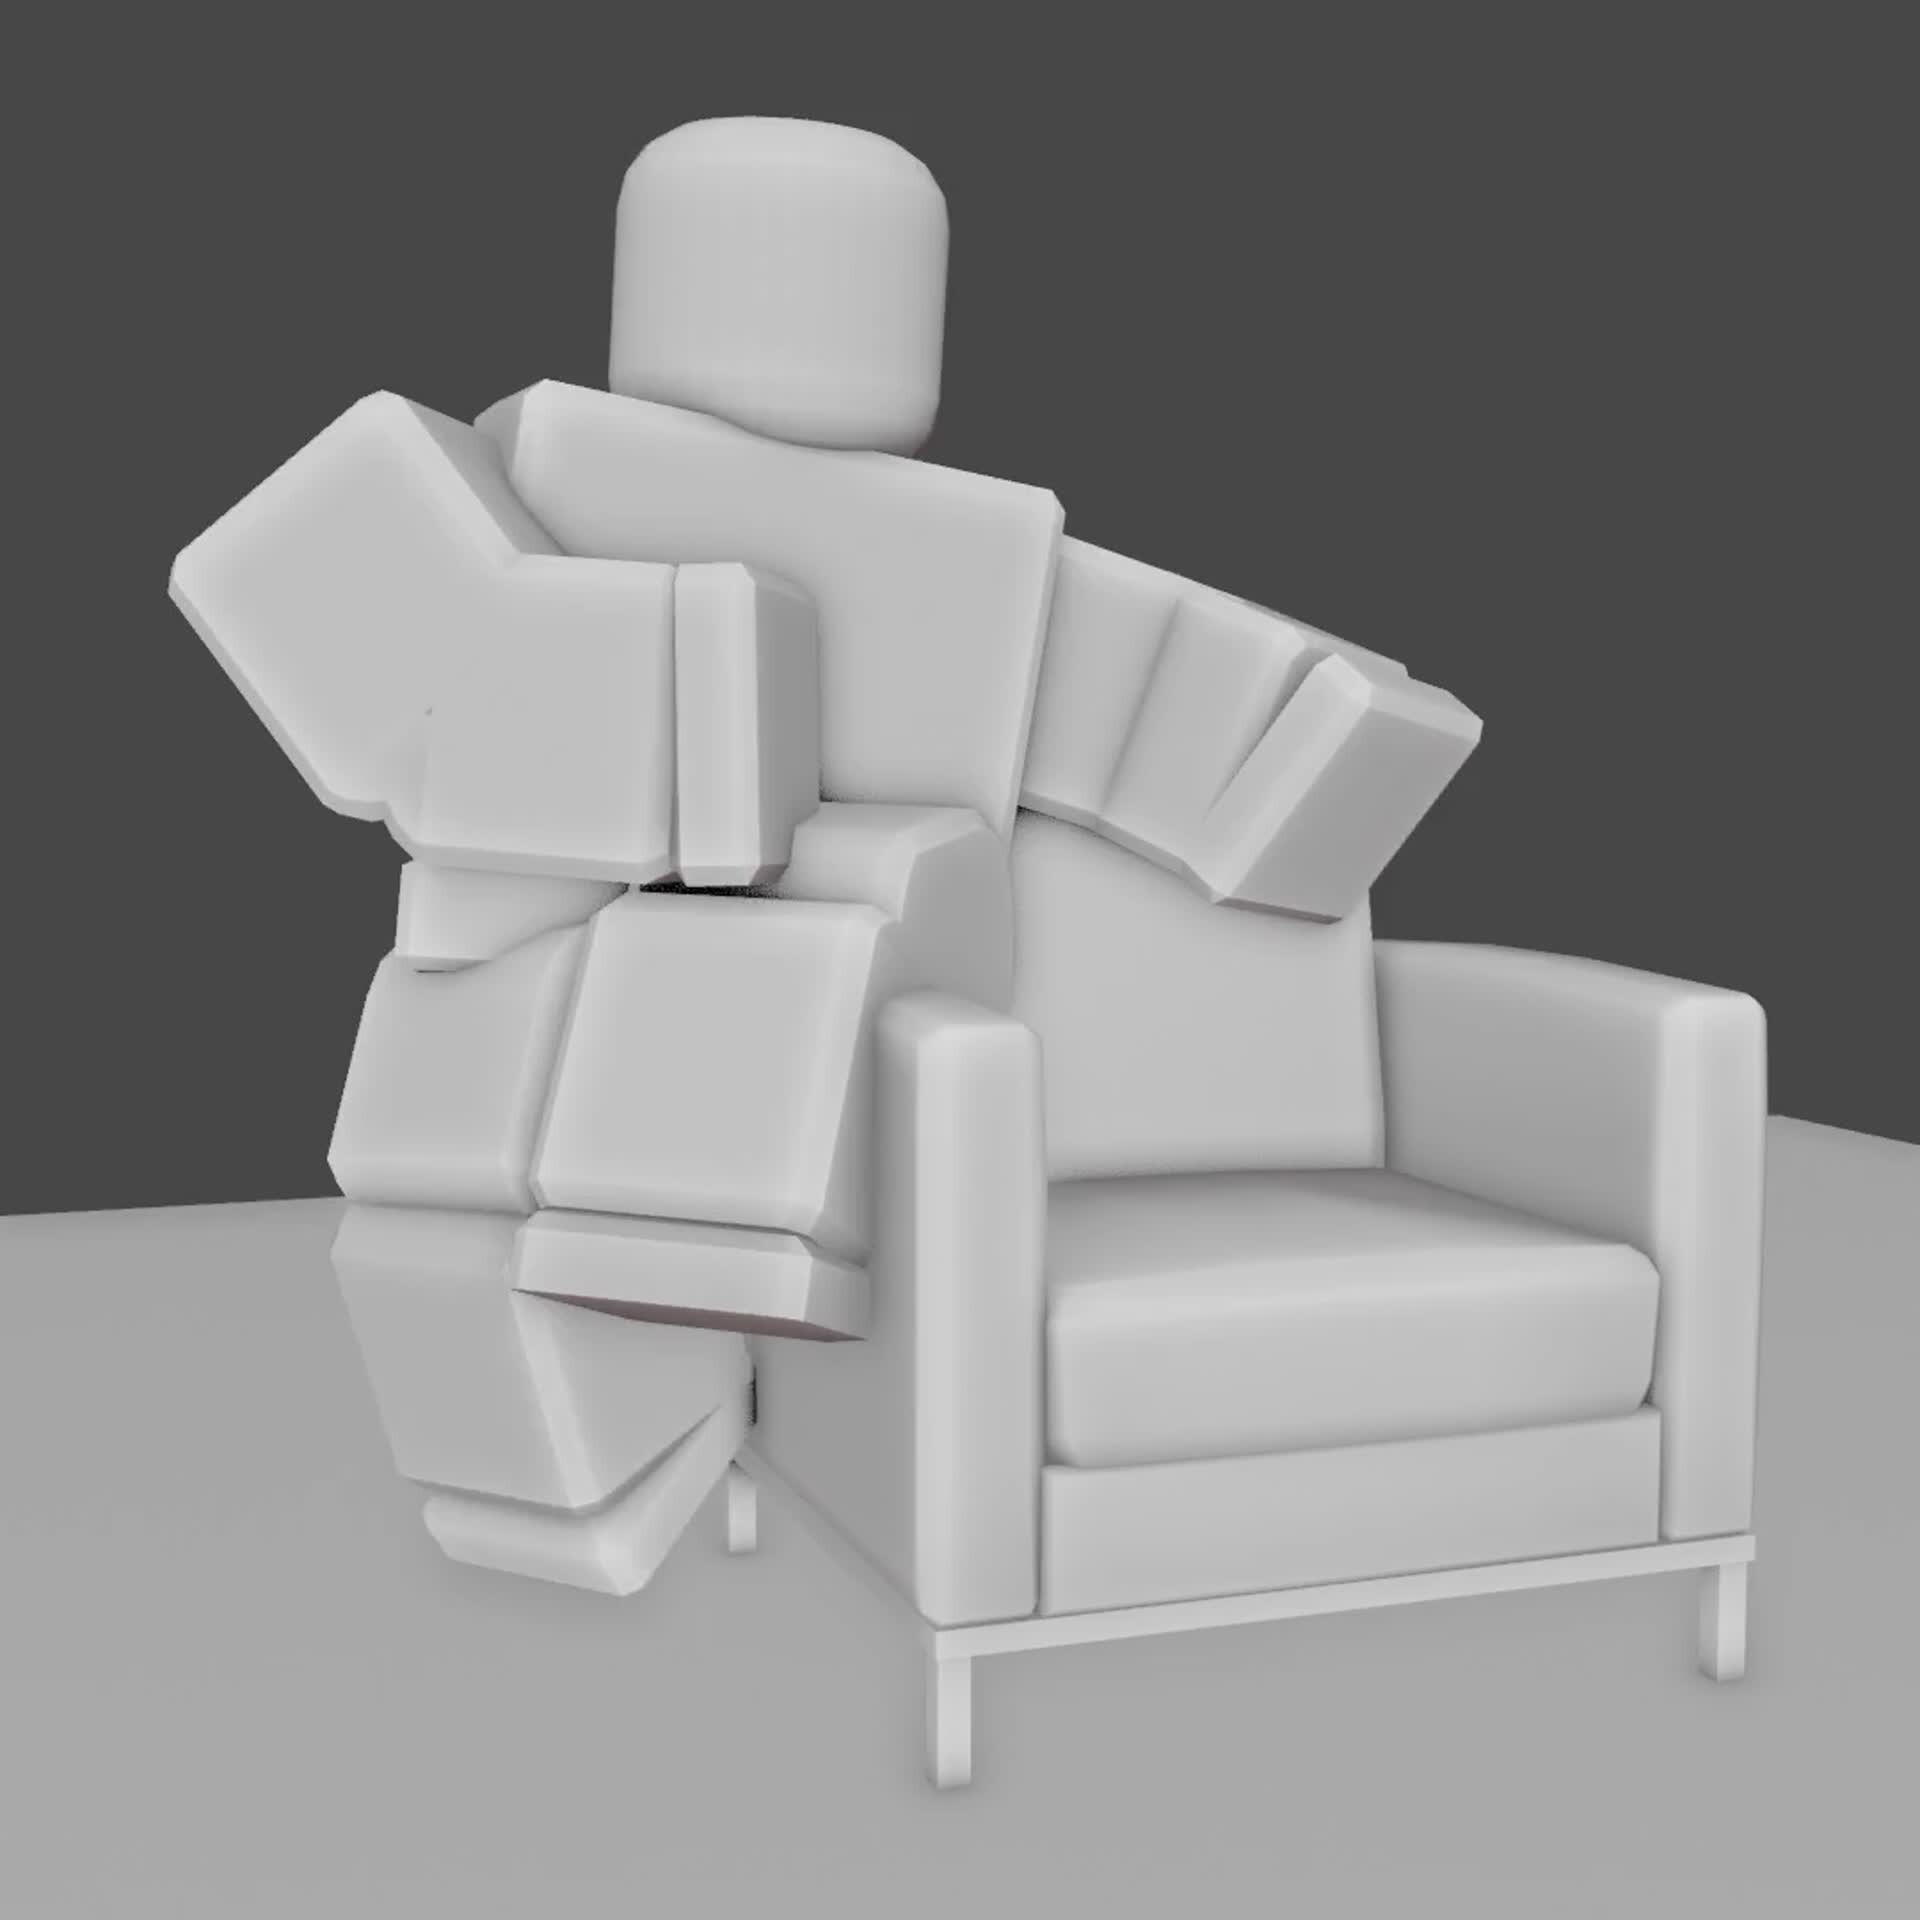 ArtStation - ROBLOX R16 Chair animations